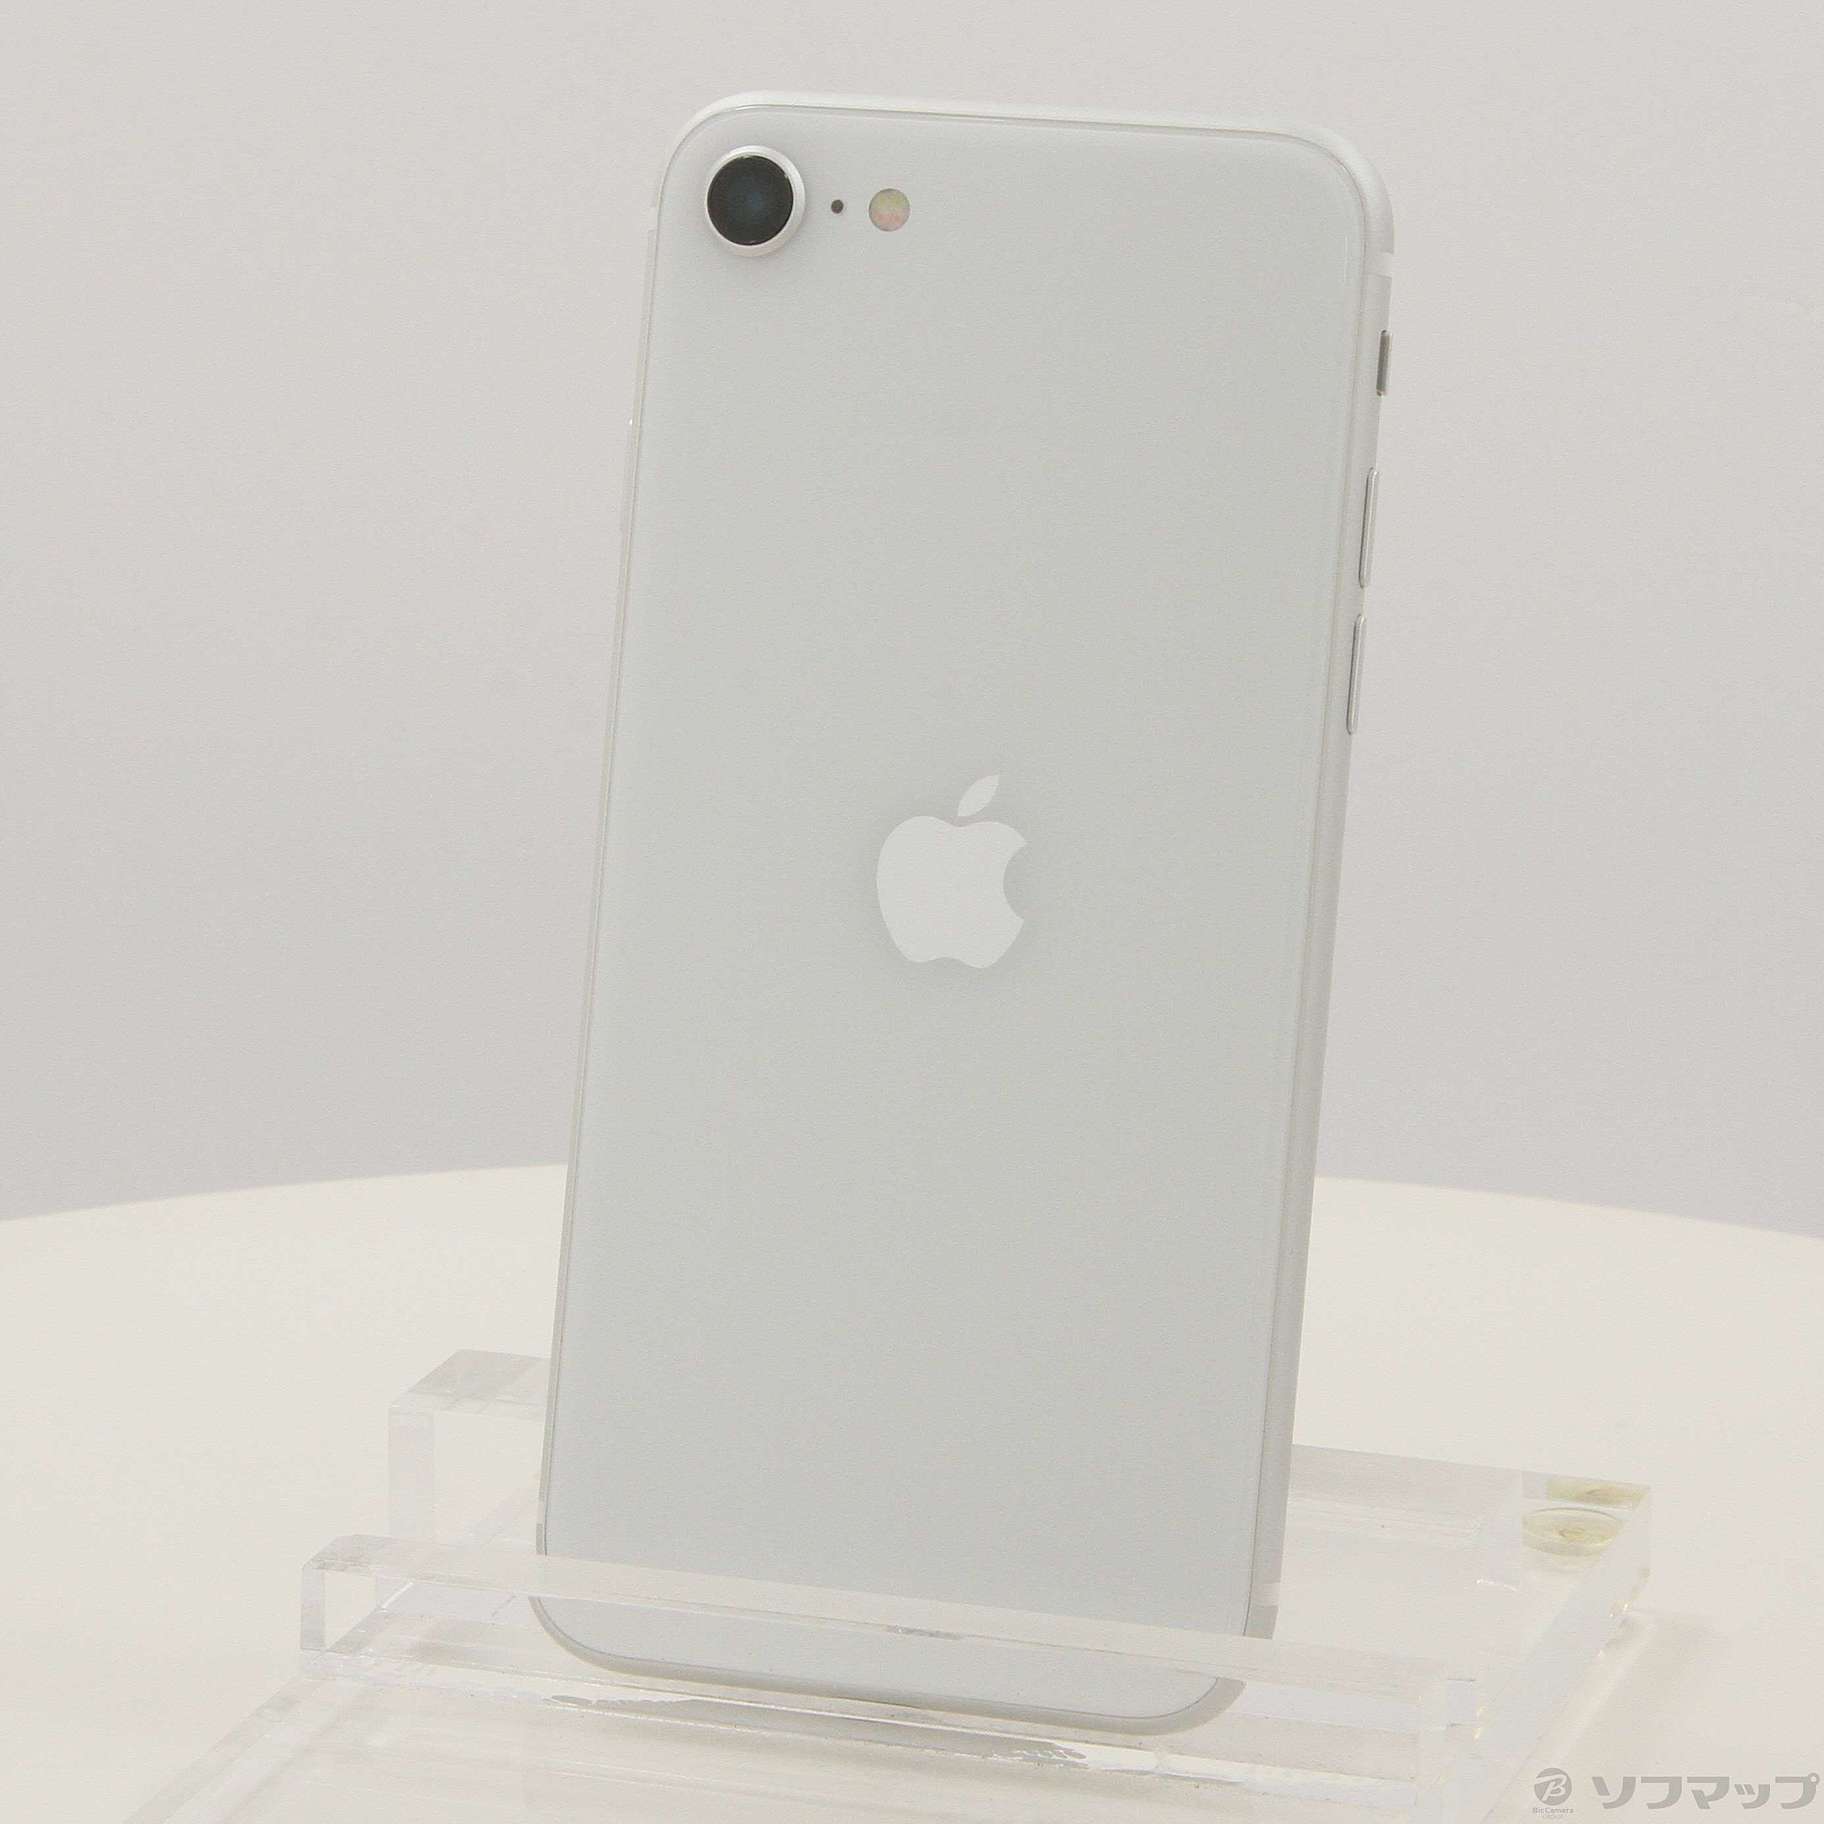 iPhone SE 第2世代 64GB ホワイト SIMフリーホワイト系